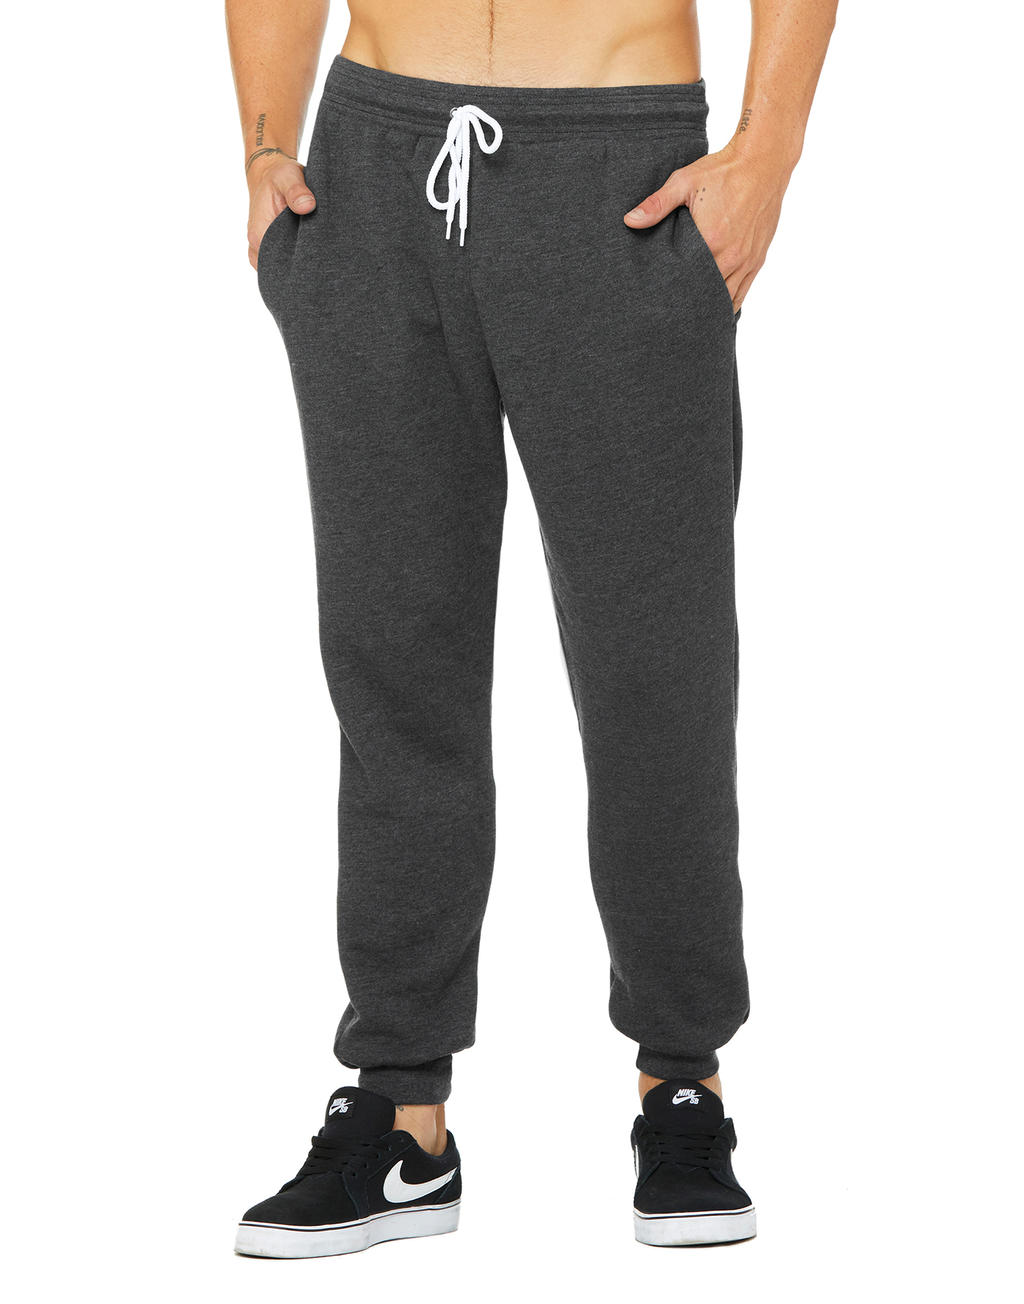  Unisex Jogger Sweatpants in Farbe Dark Grey Heather